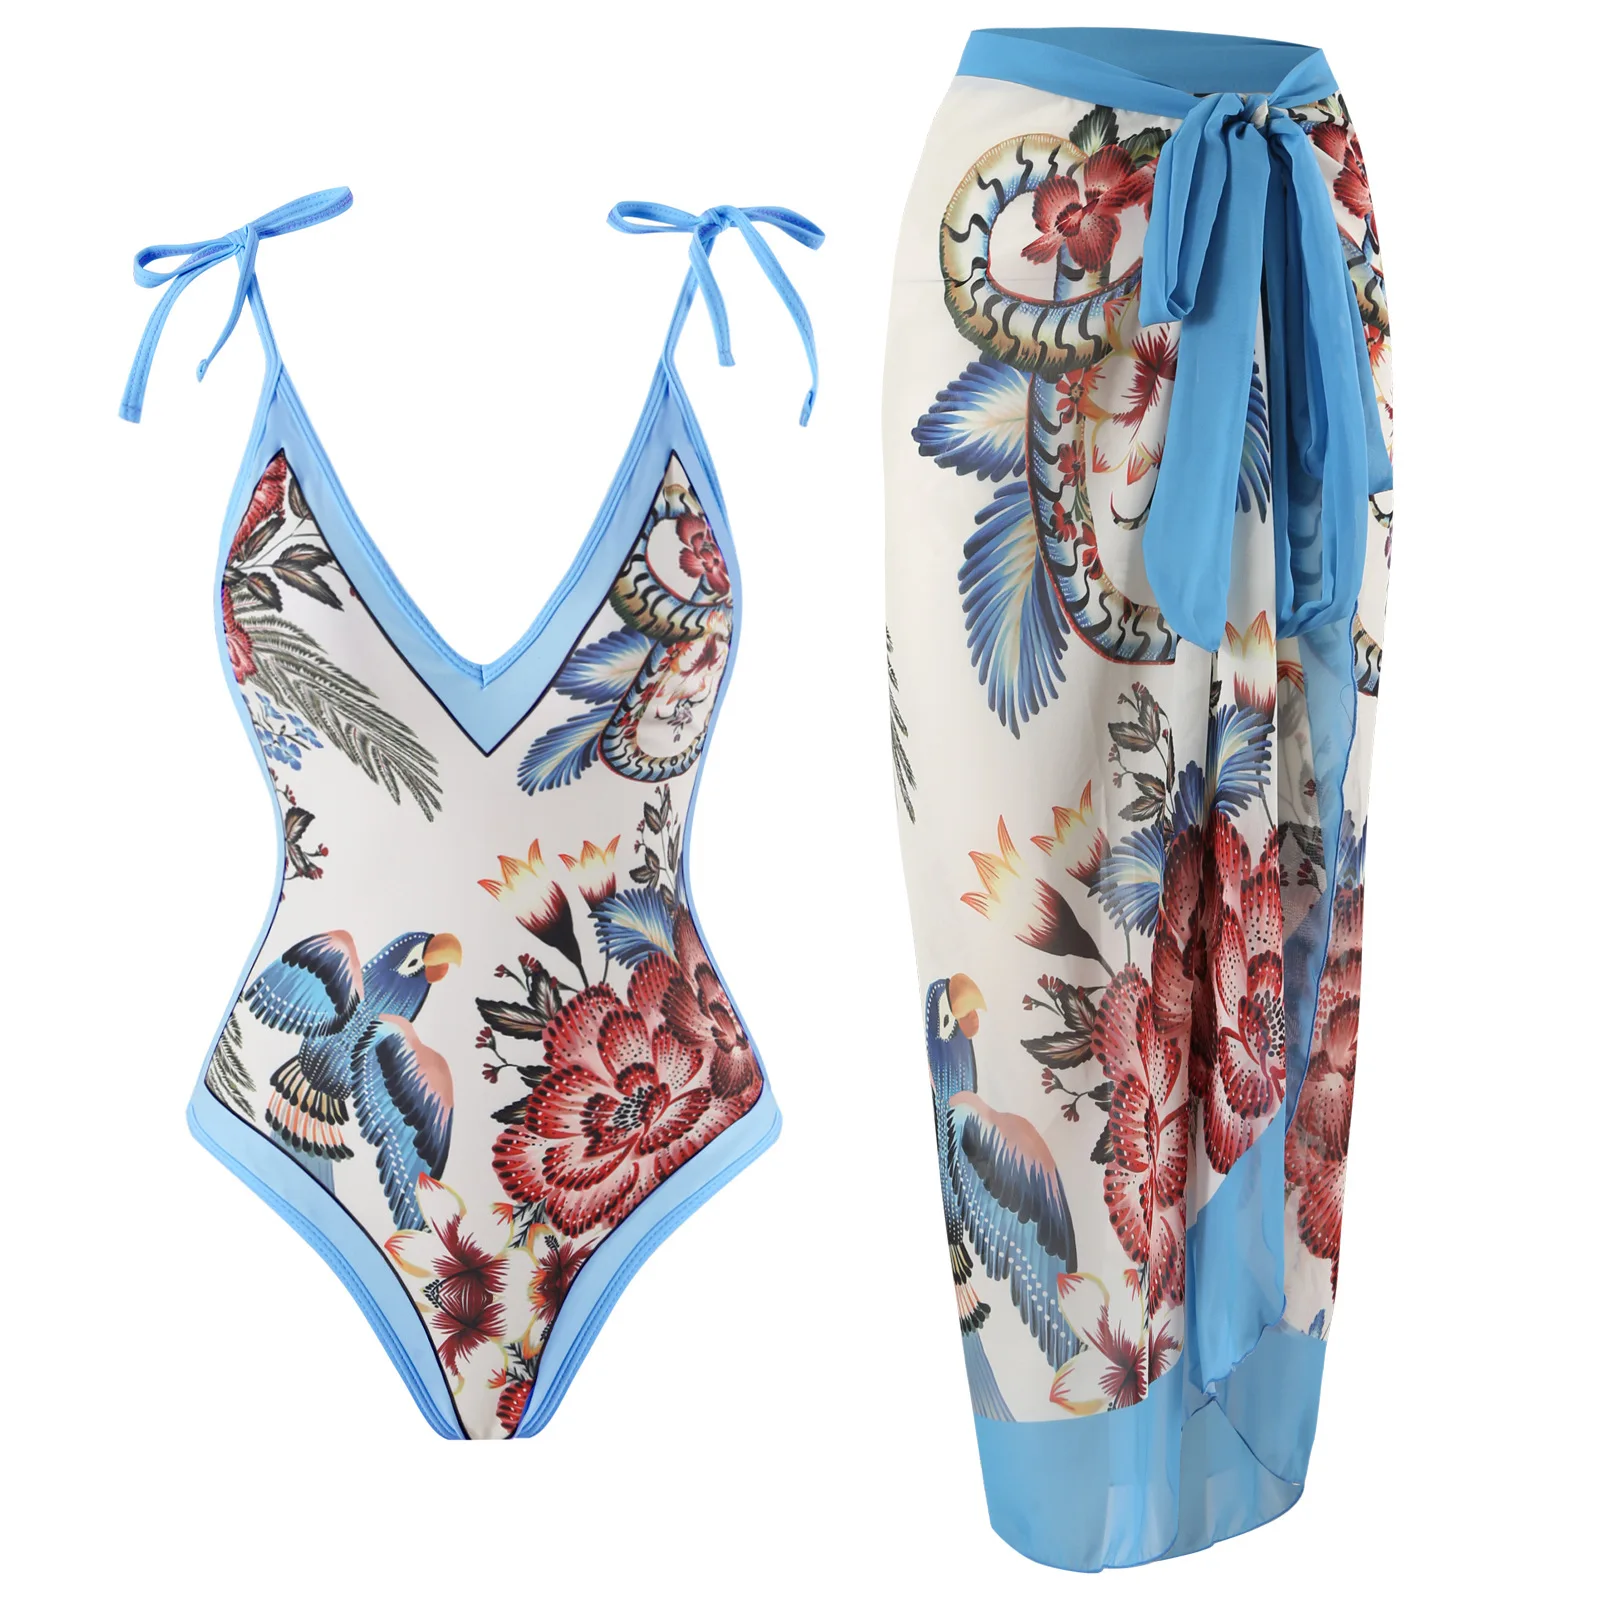 

NEW Women Swimwear With Cover-ups Retro Brazilian Swim Suit Luxury One-piece Backless Bathingsuit Vintage Floral Bird Print